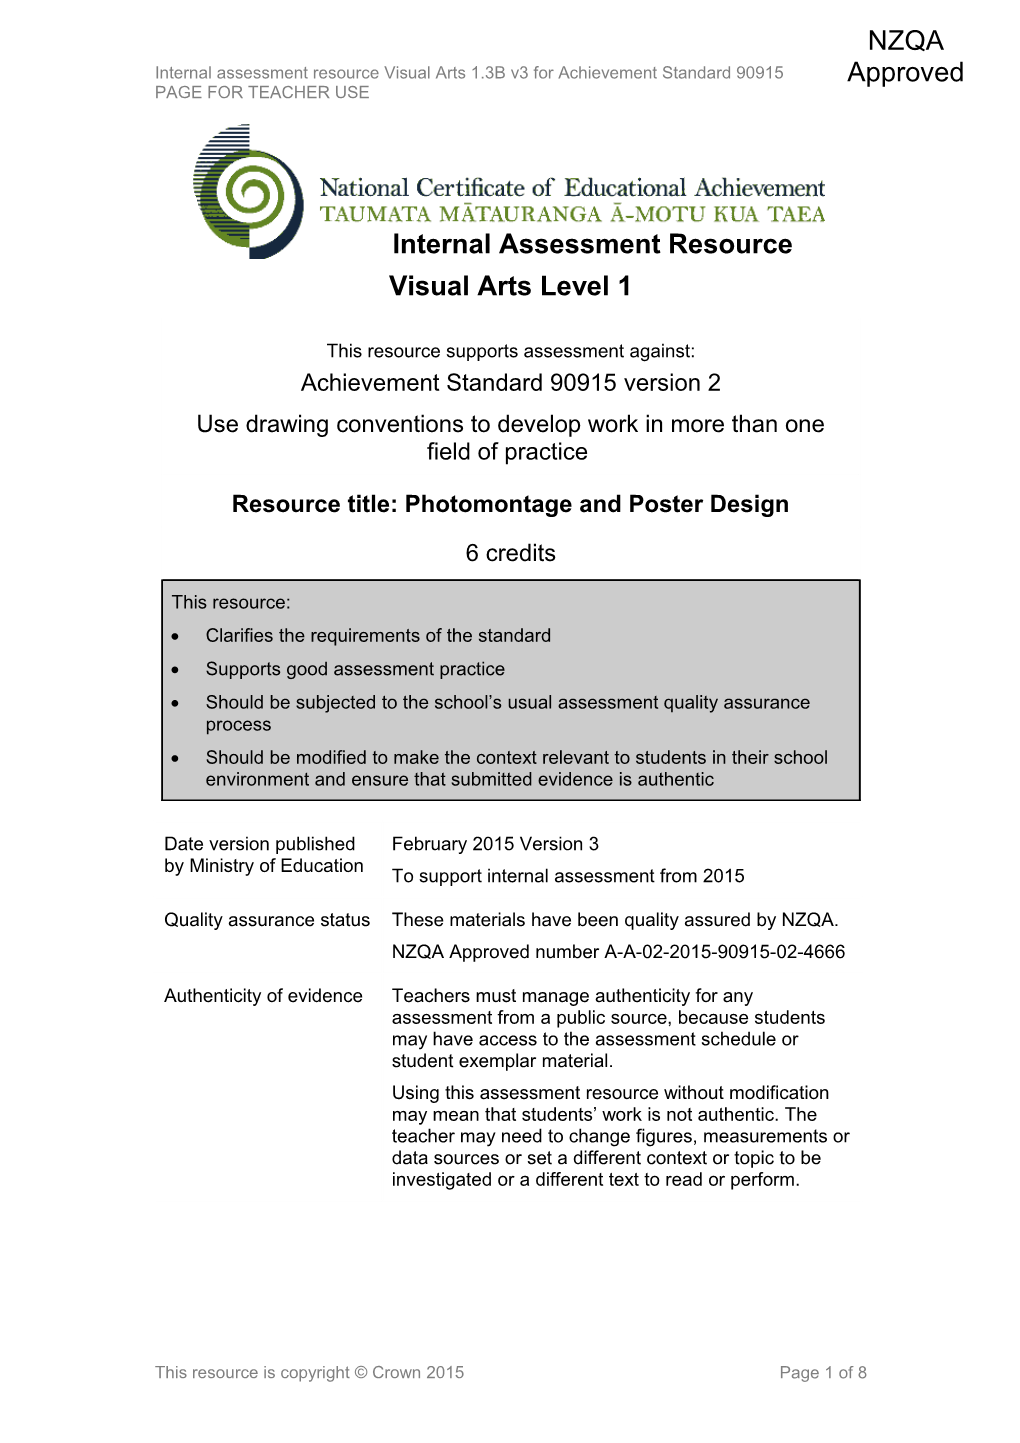 Visual Arts Level 1 Internal Assessment Resource